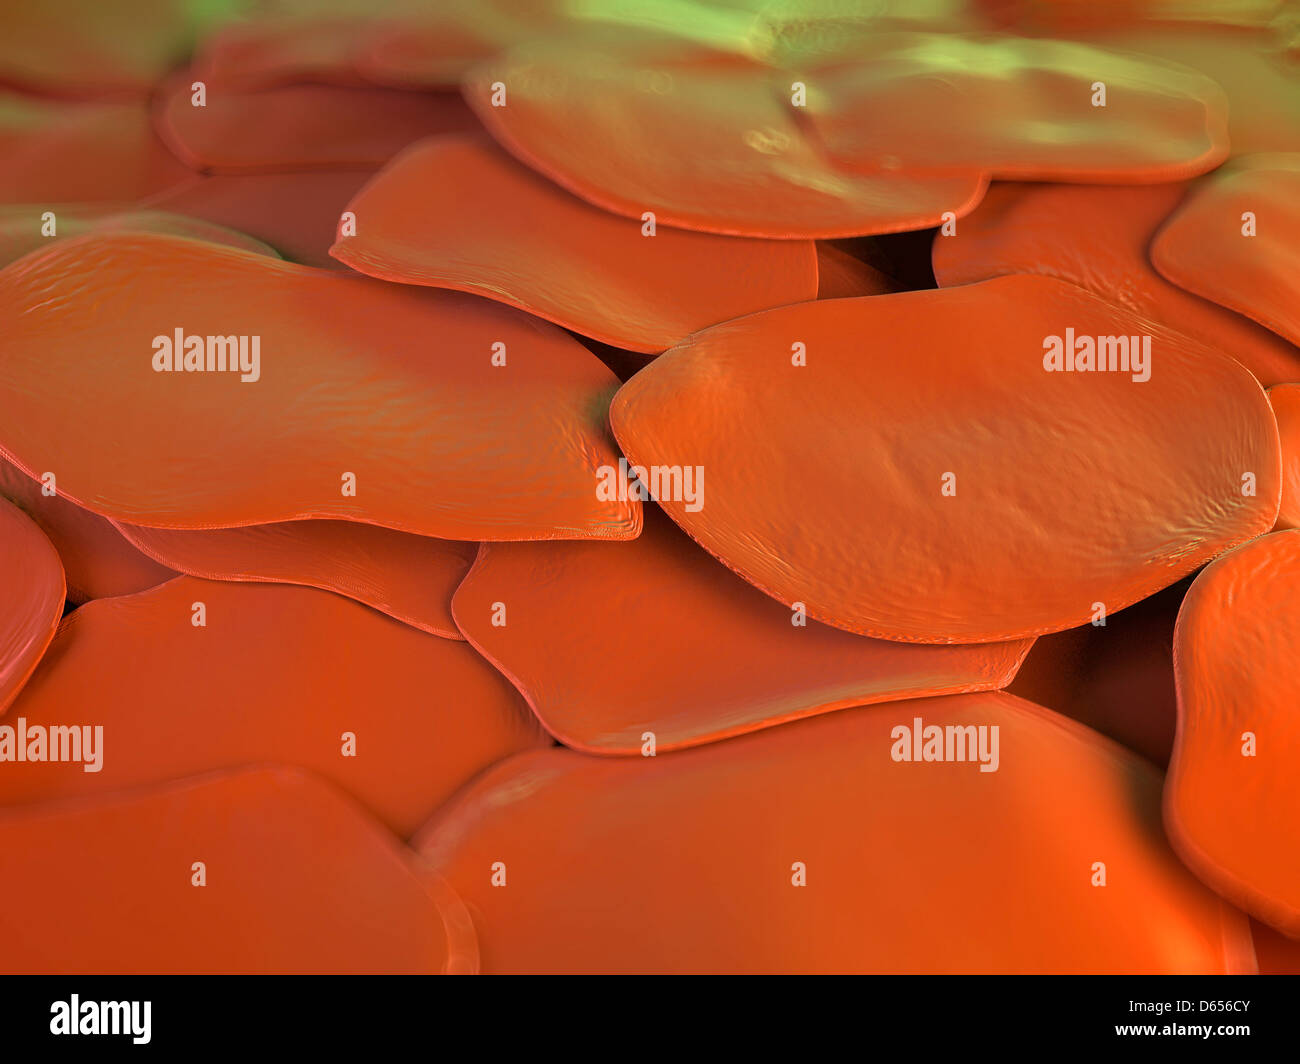 Human skin cells, artwork Stock Photo